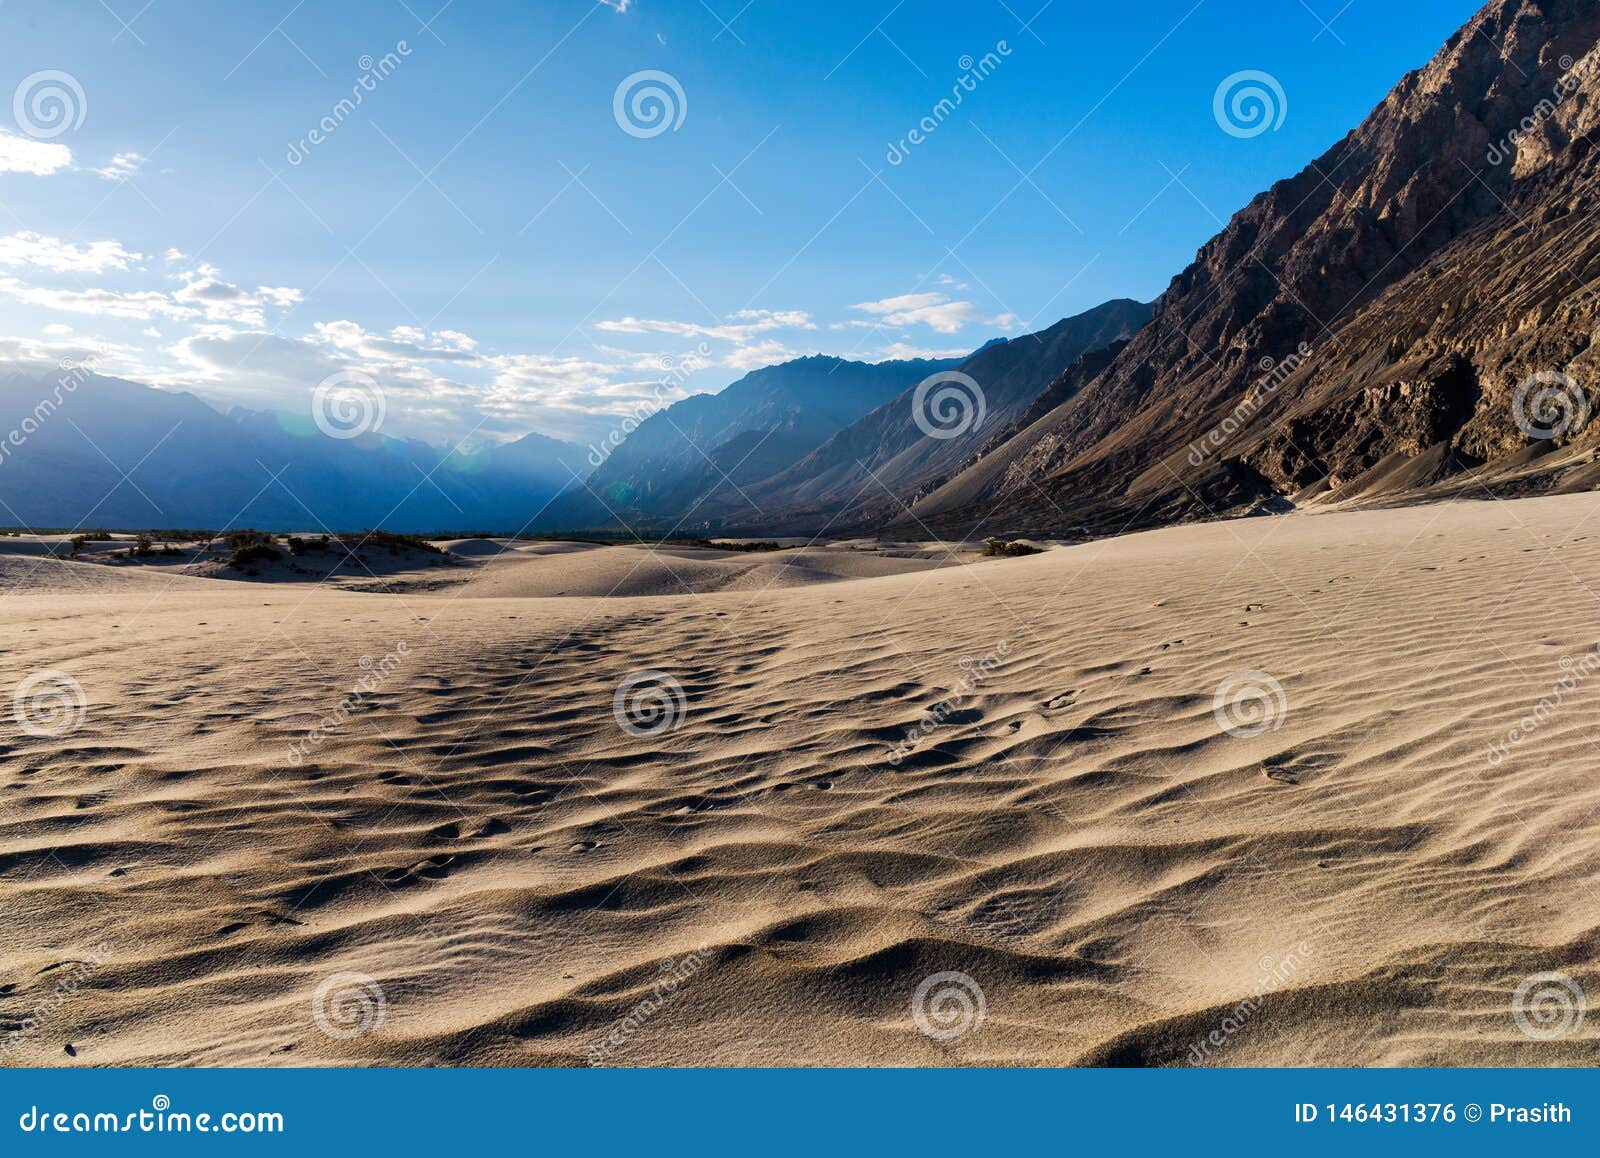 Desert of Nubra Valley, Leh, Ladakh, Jammu and Kashmir, Northern India  Stock Photo - Image of asia, holiday: 146431376